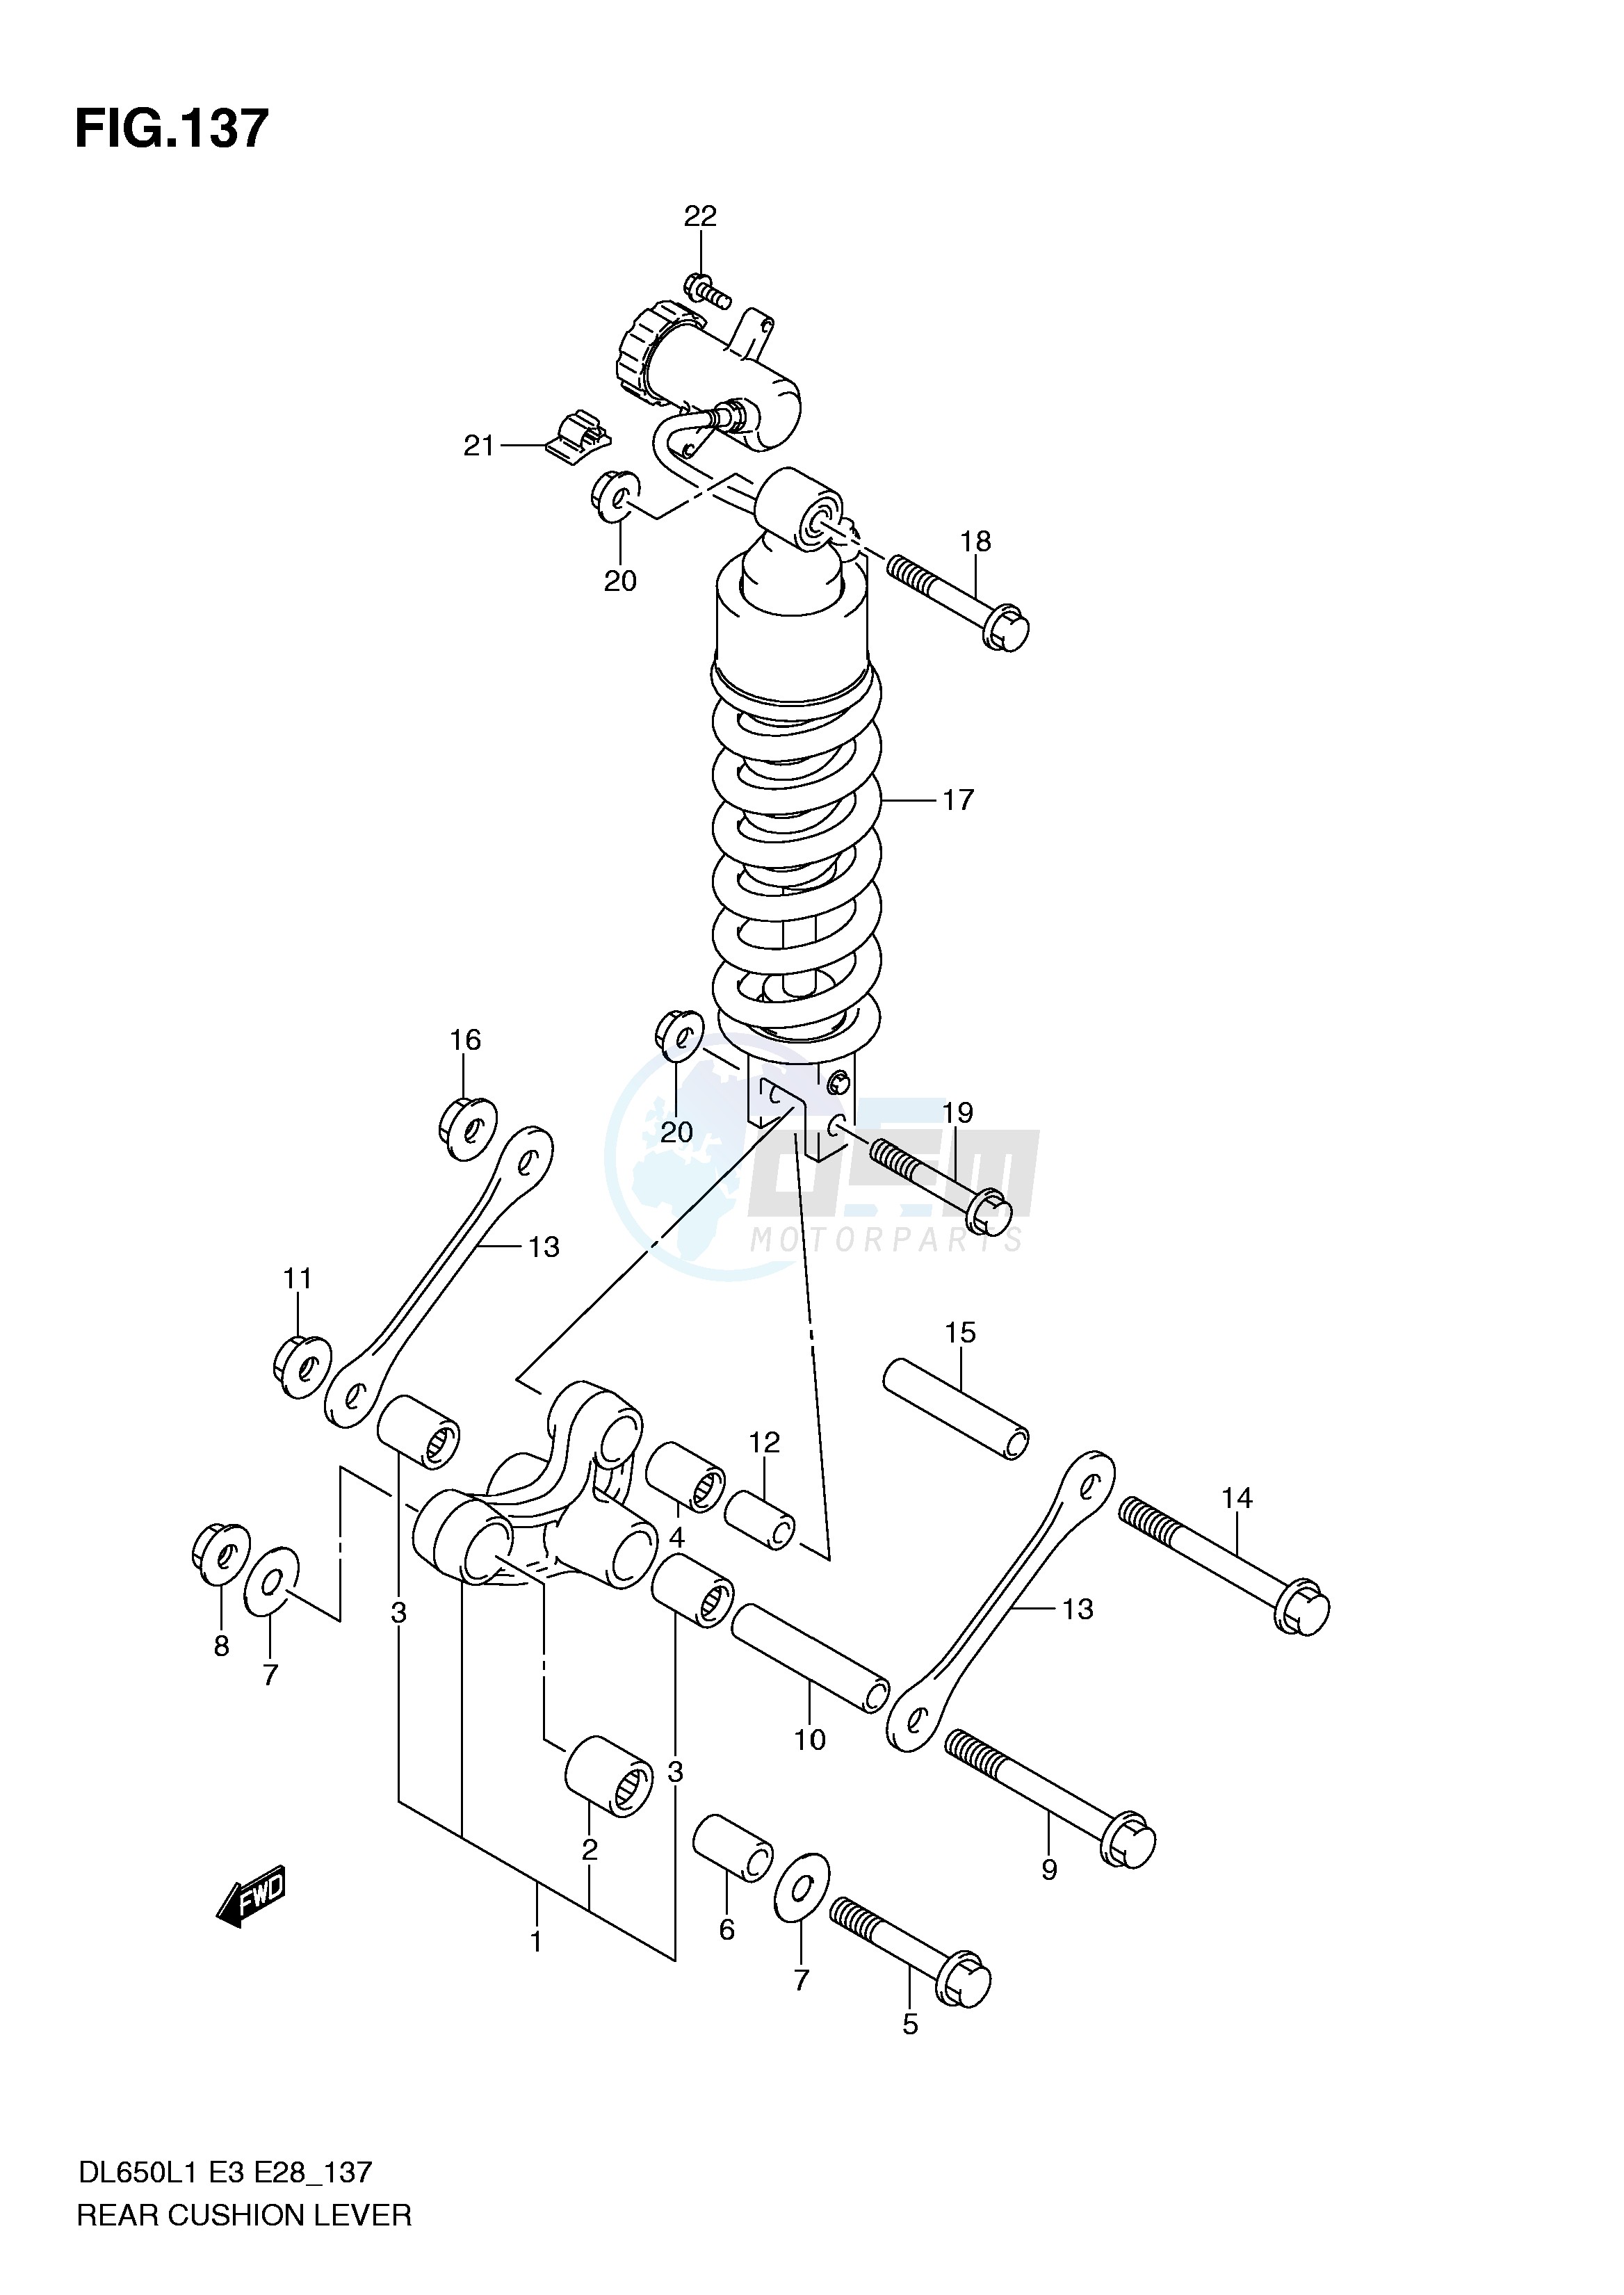 REAR CUSHION LEVER (DL650L1 E28) blueprint